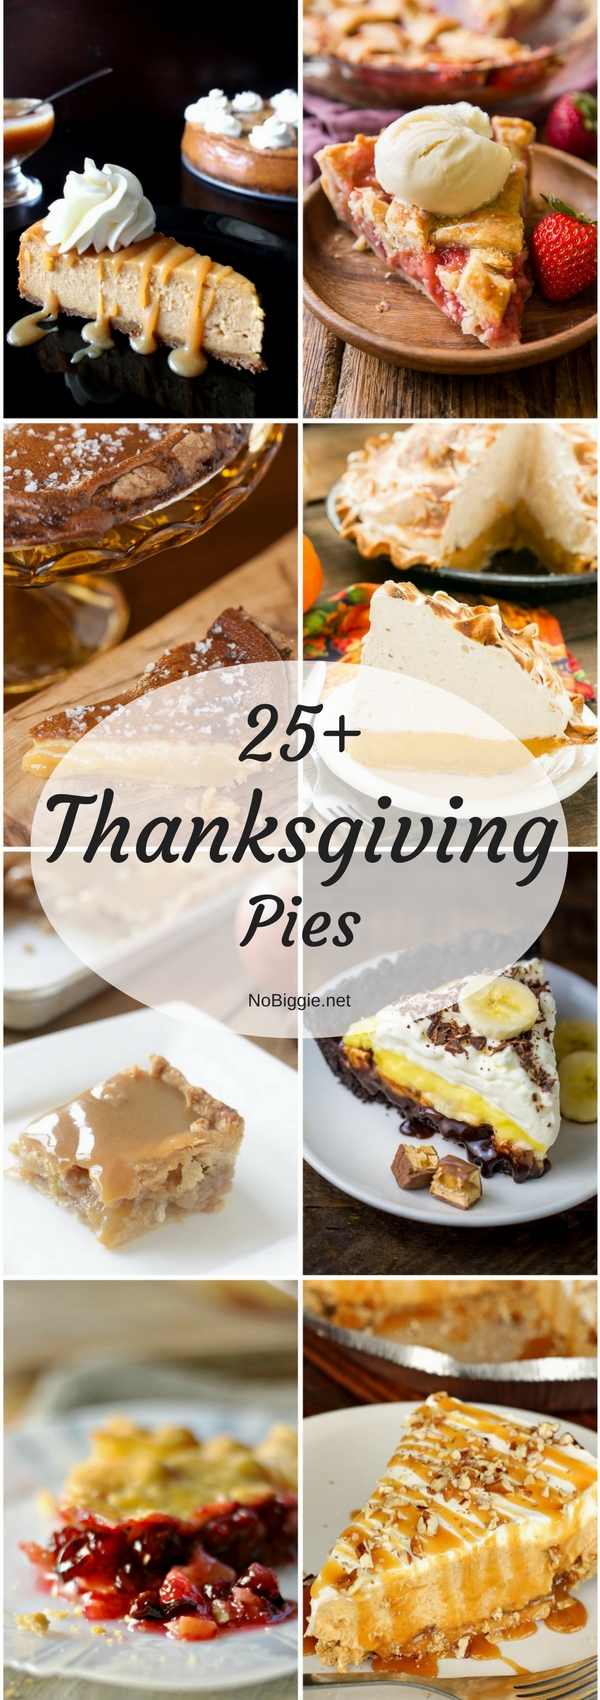 25+ Thanksgiving Pies | NoBiggie.net